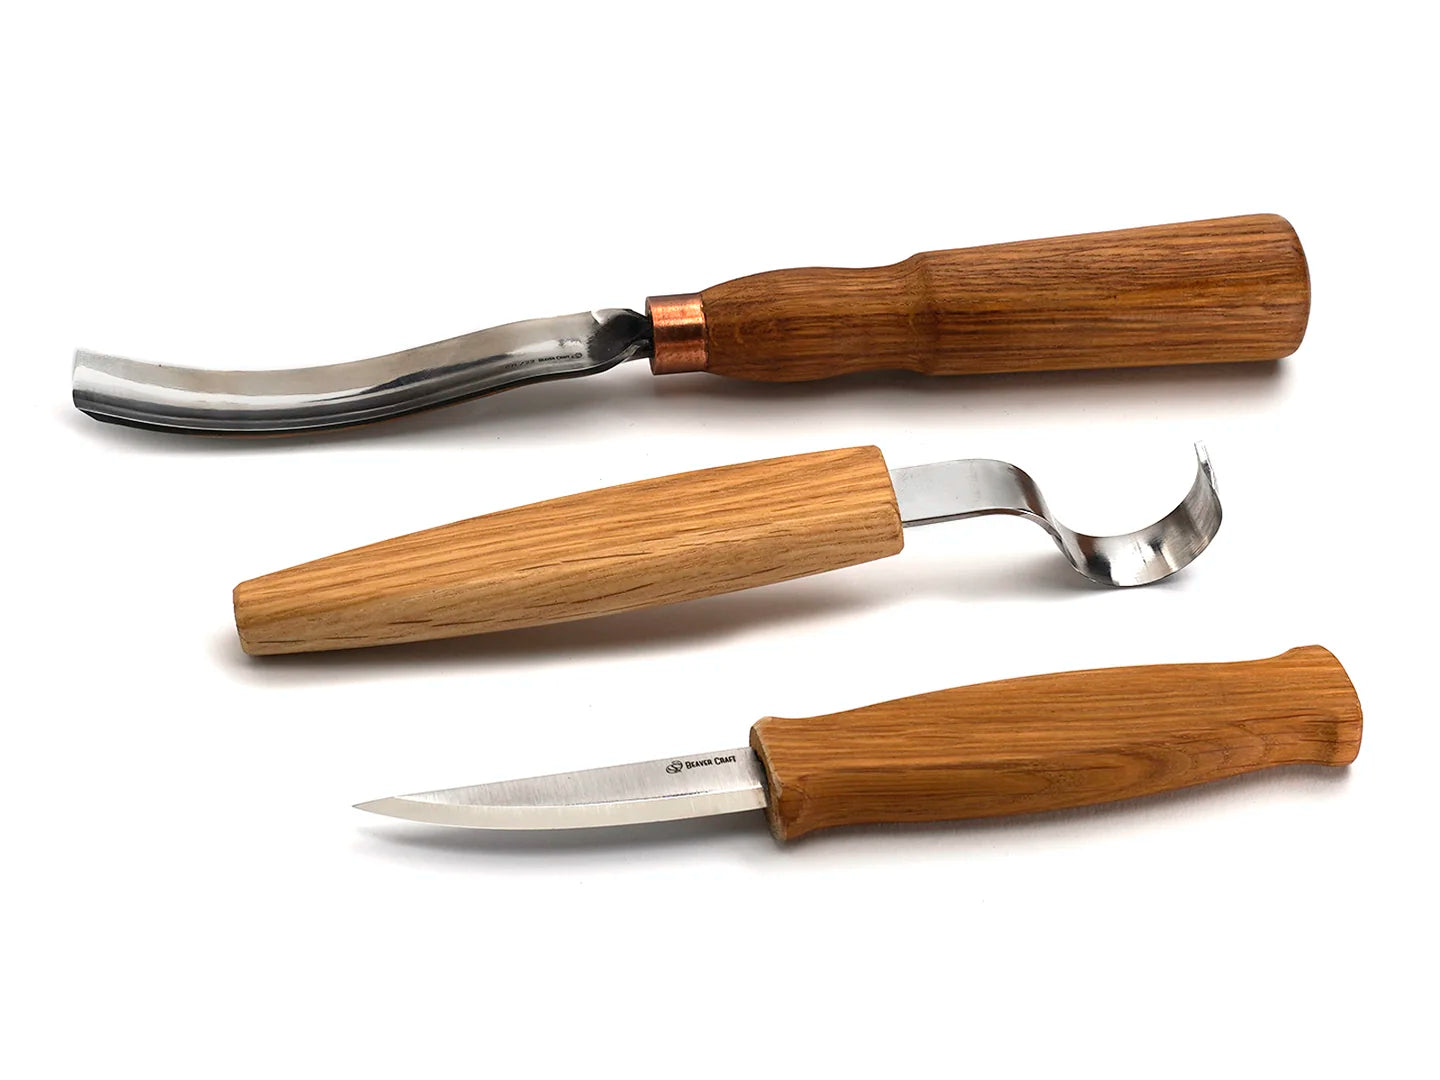  BeaverCraft S14 Wood Carving Tools Set Wood Whittling Kit Wood  Carving Kit Wood Carving Hook Knife Spoon Carving Tools Wood Carving Knives  Carving Tools Chisel Gouges Spoon Carving Kit for Beginners 